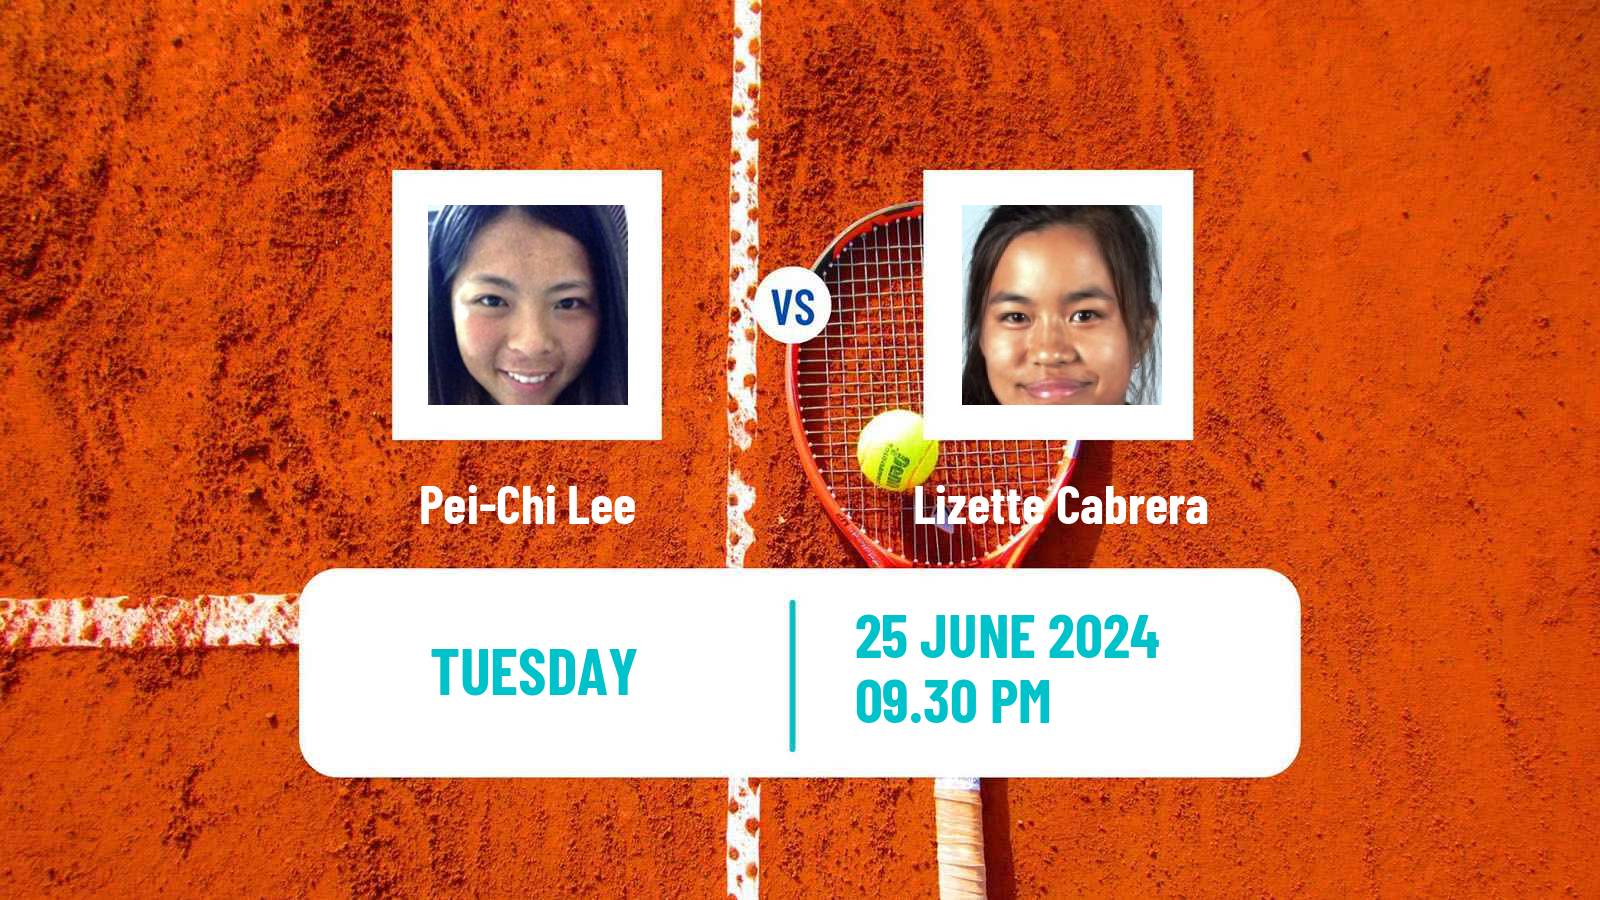 Tennis ITF W35 Taipei 2 Women Pei-Chi Lee - Lizette Cabrera